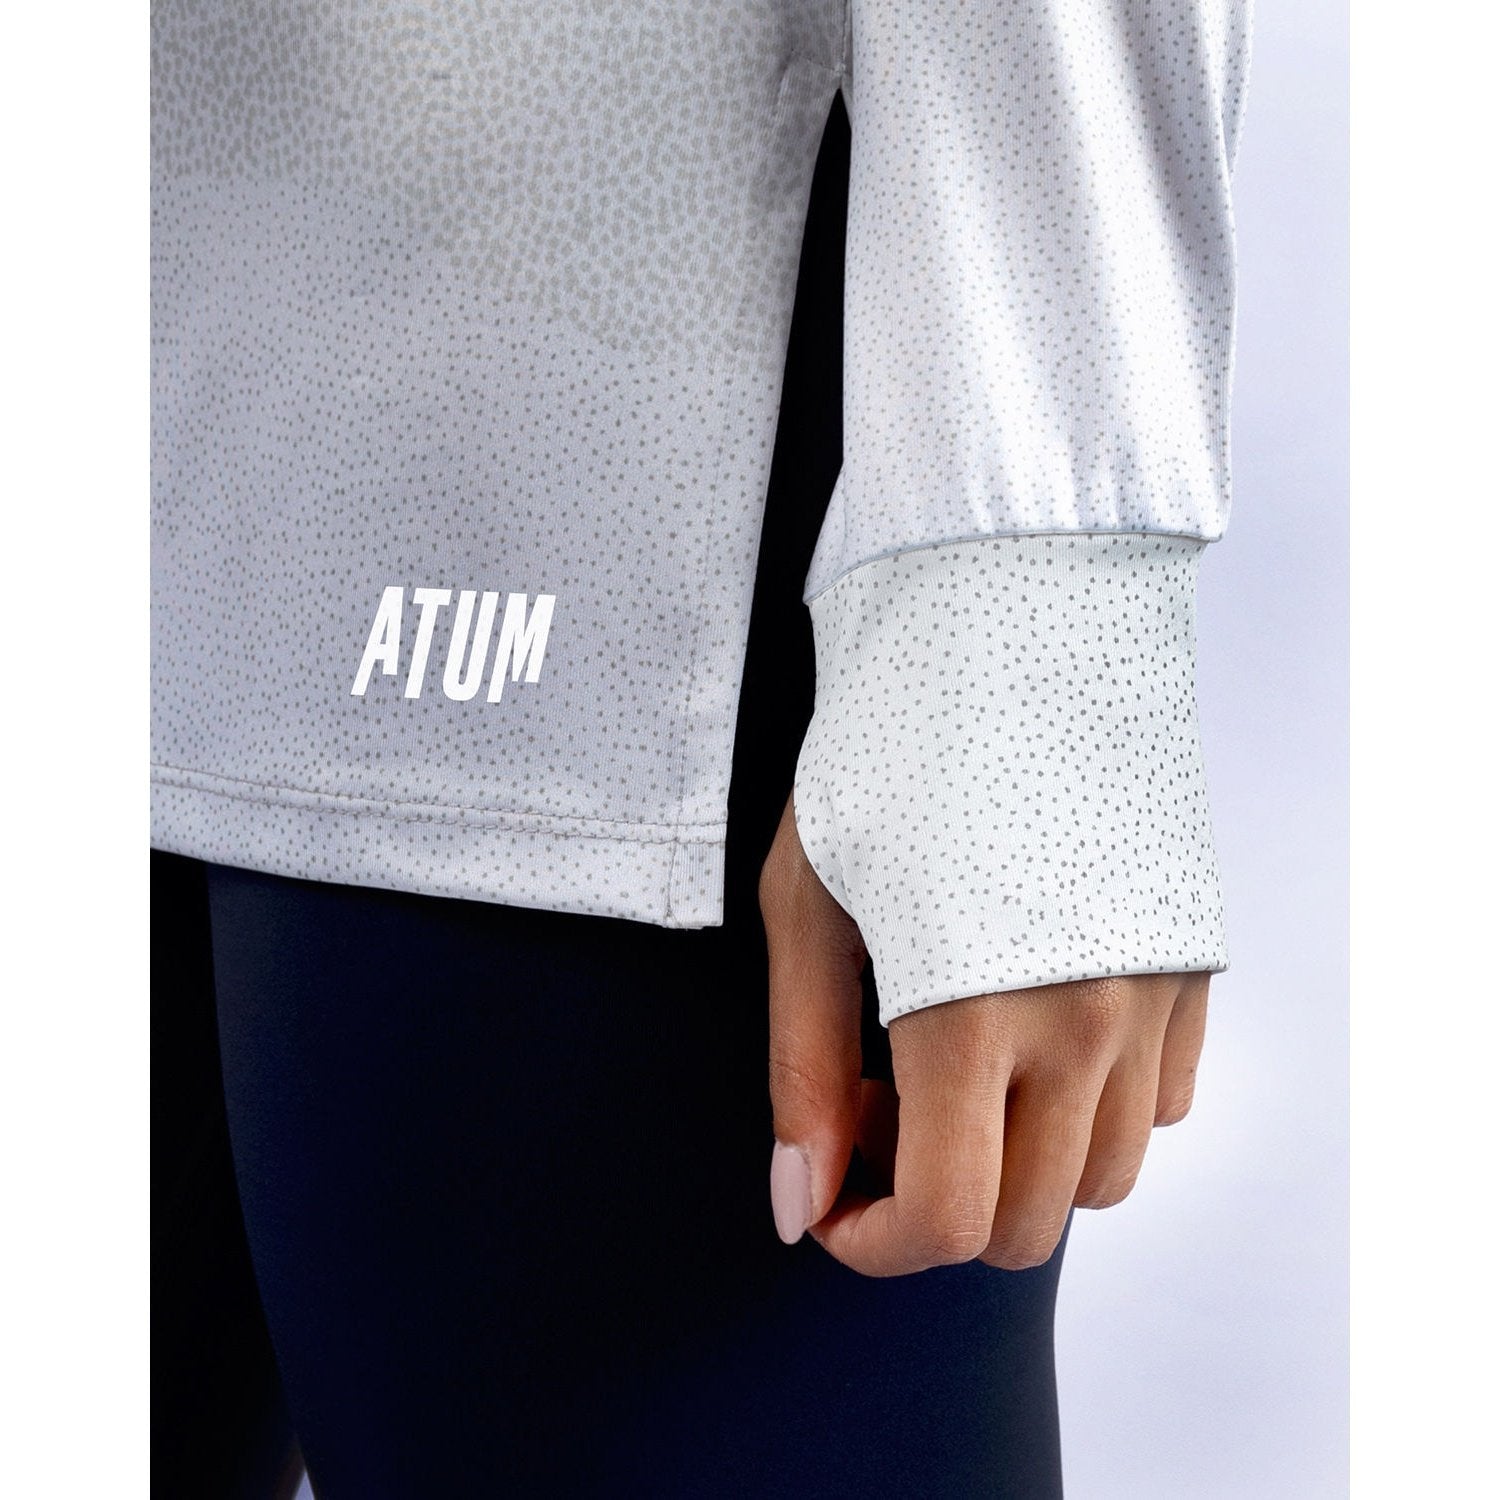 Atum women's gradient T-shirt